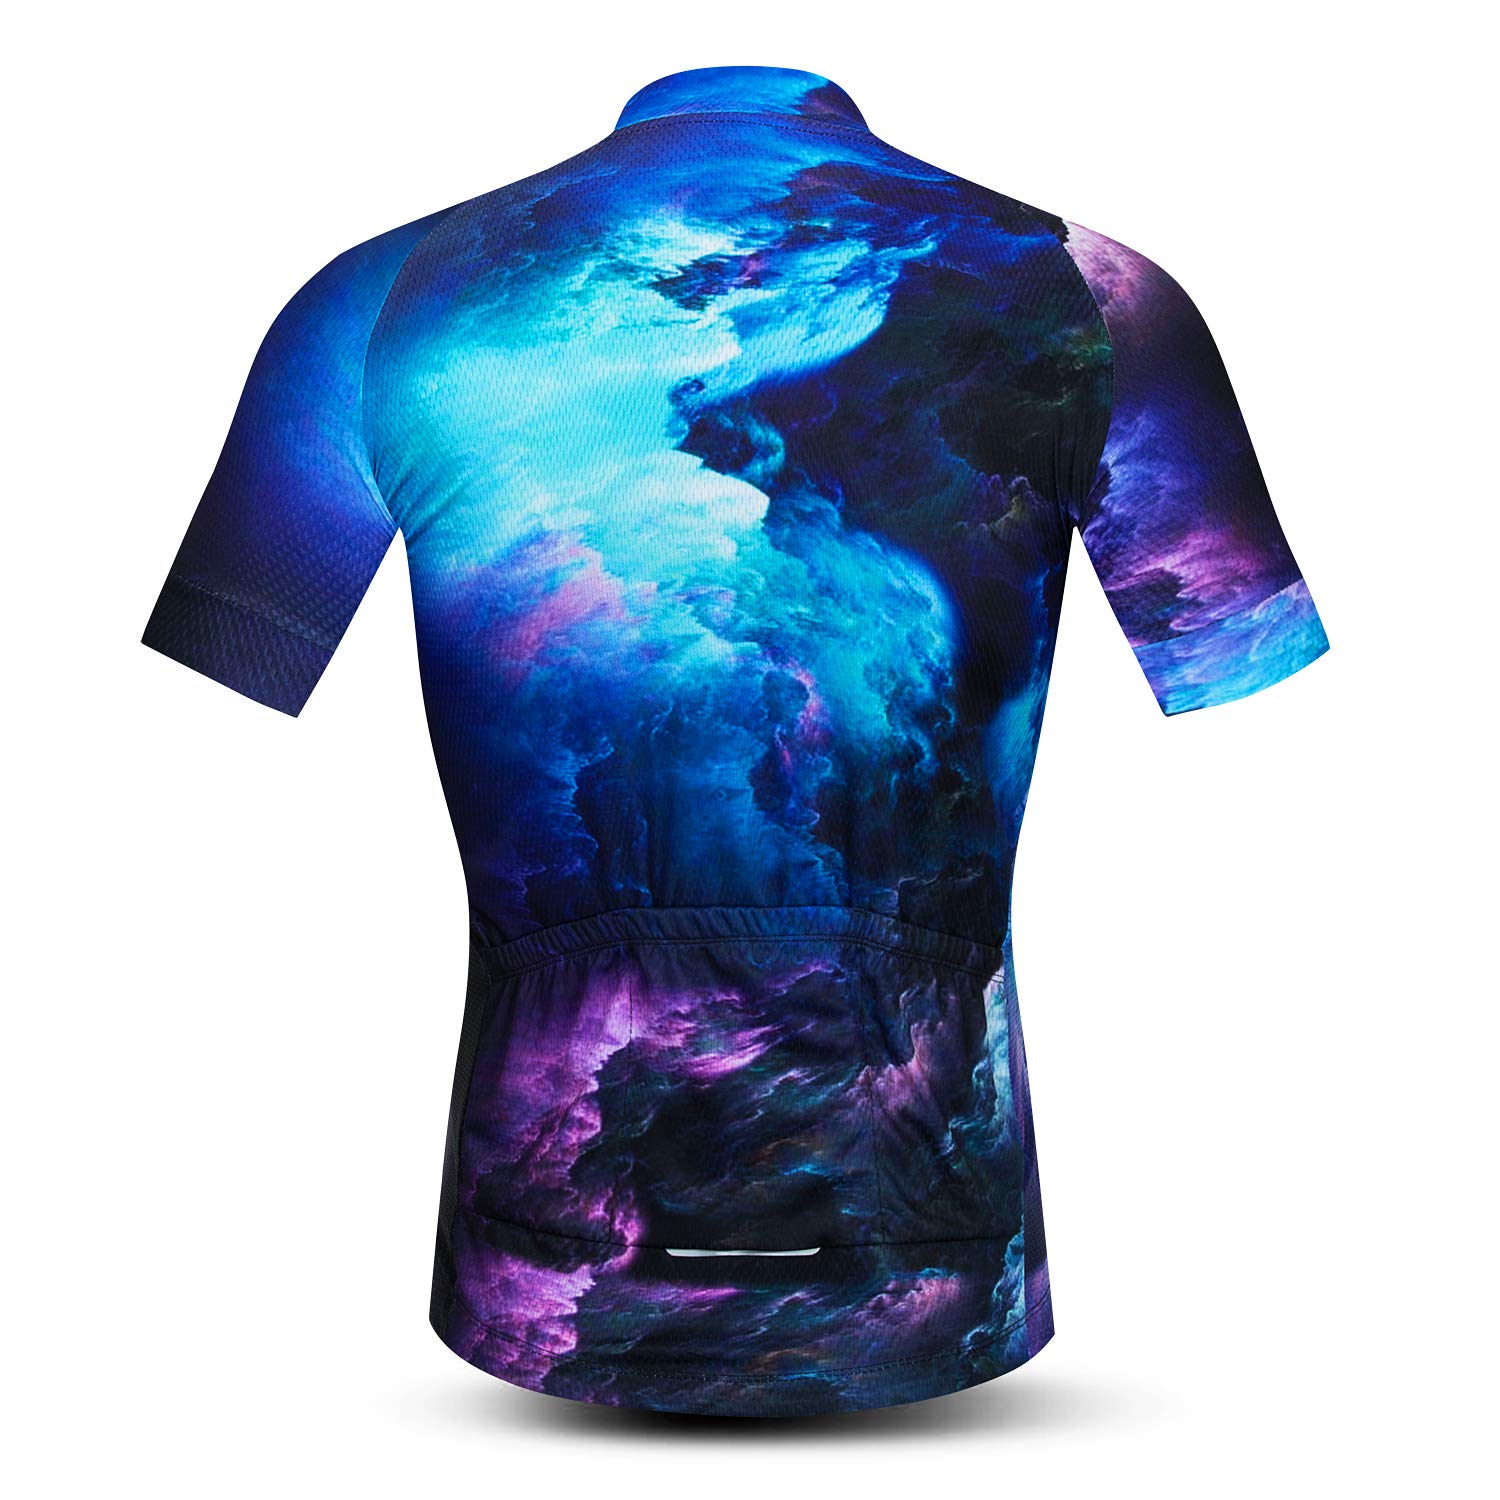 JPOJPO Men's Cycling Jersey,Bike Short Sleeve,Racing Cycling Clothing,3D Print Pattern ，Comfortable Quick Dry